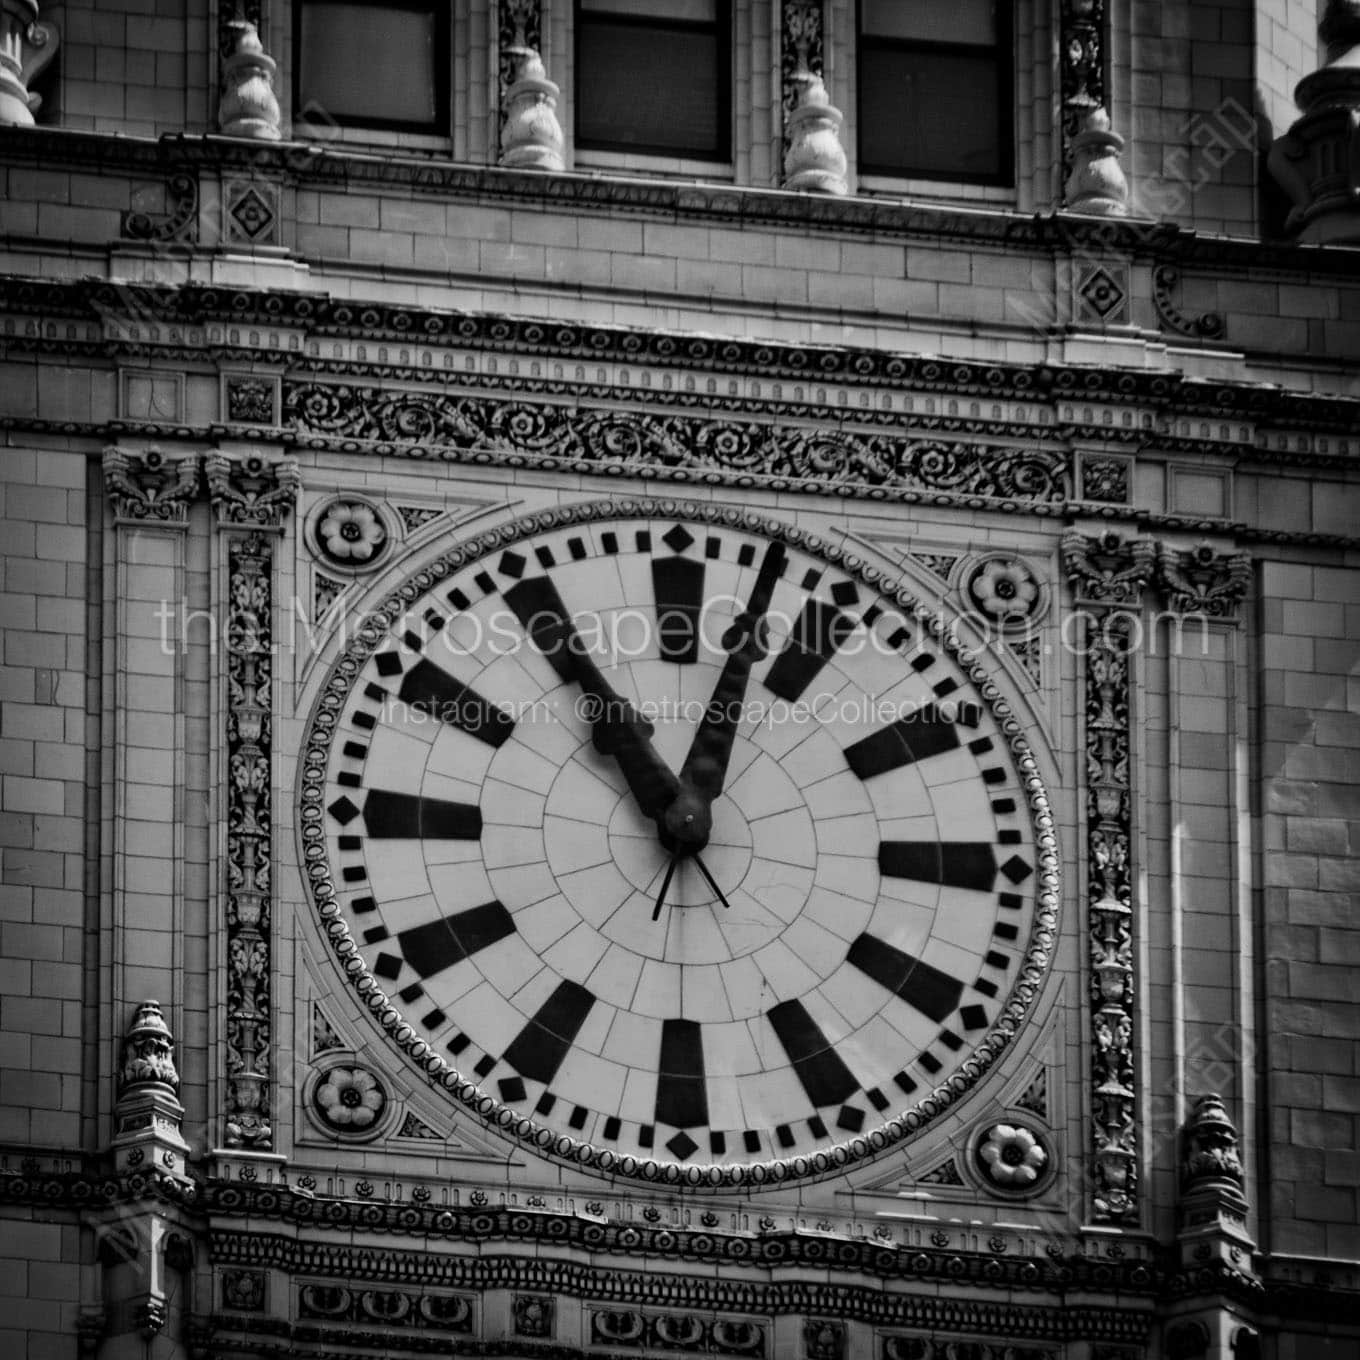 wrigley building clock face Black & White Wall Art